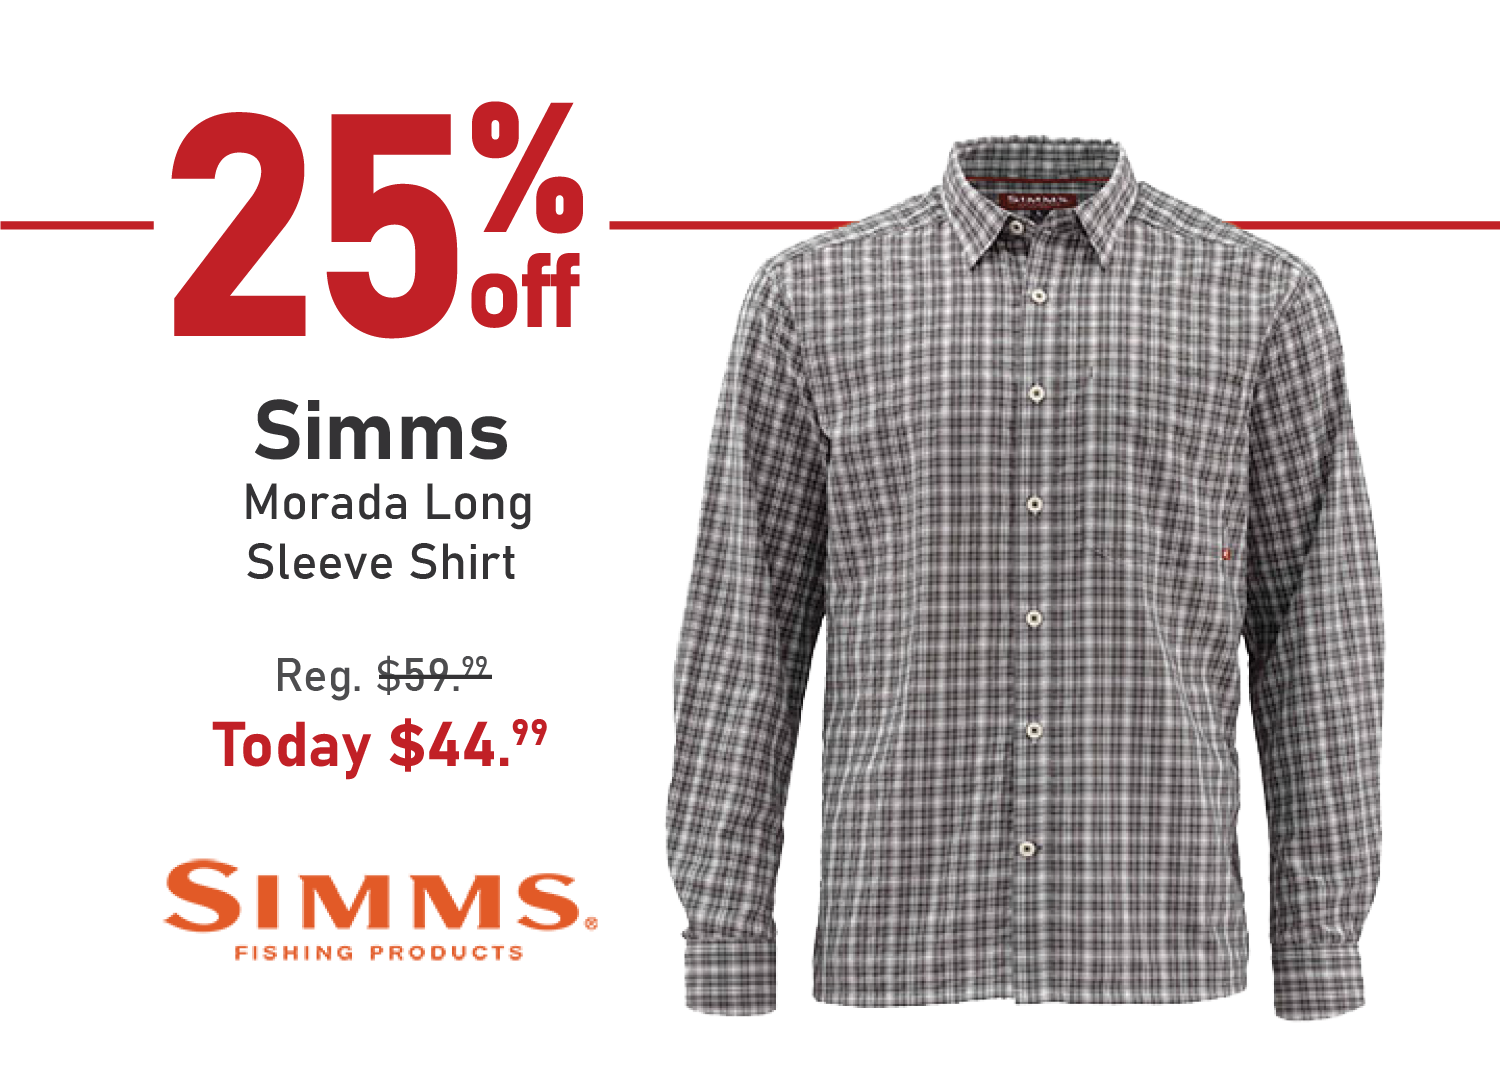 Take 25% off the Simms Morada Long Sleeve Shirt